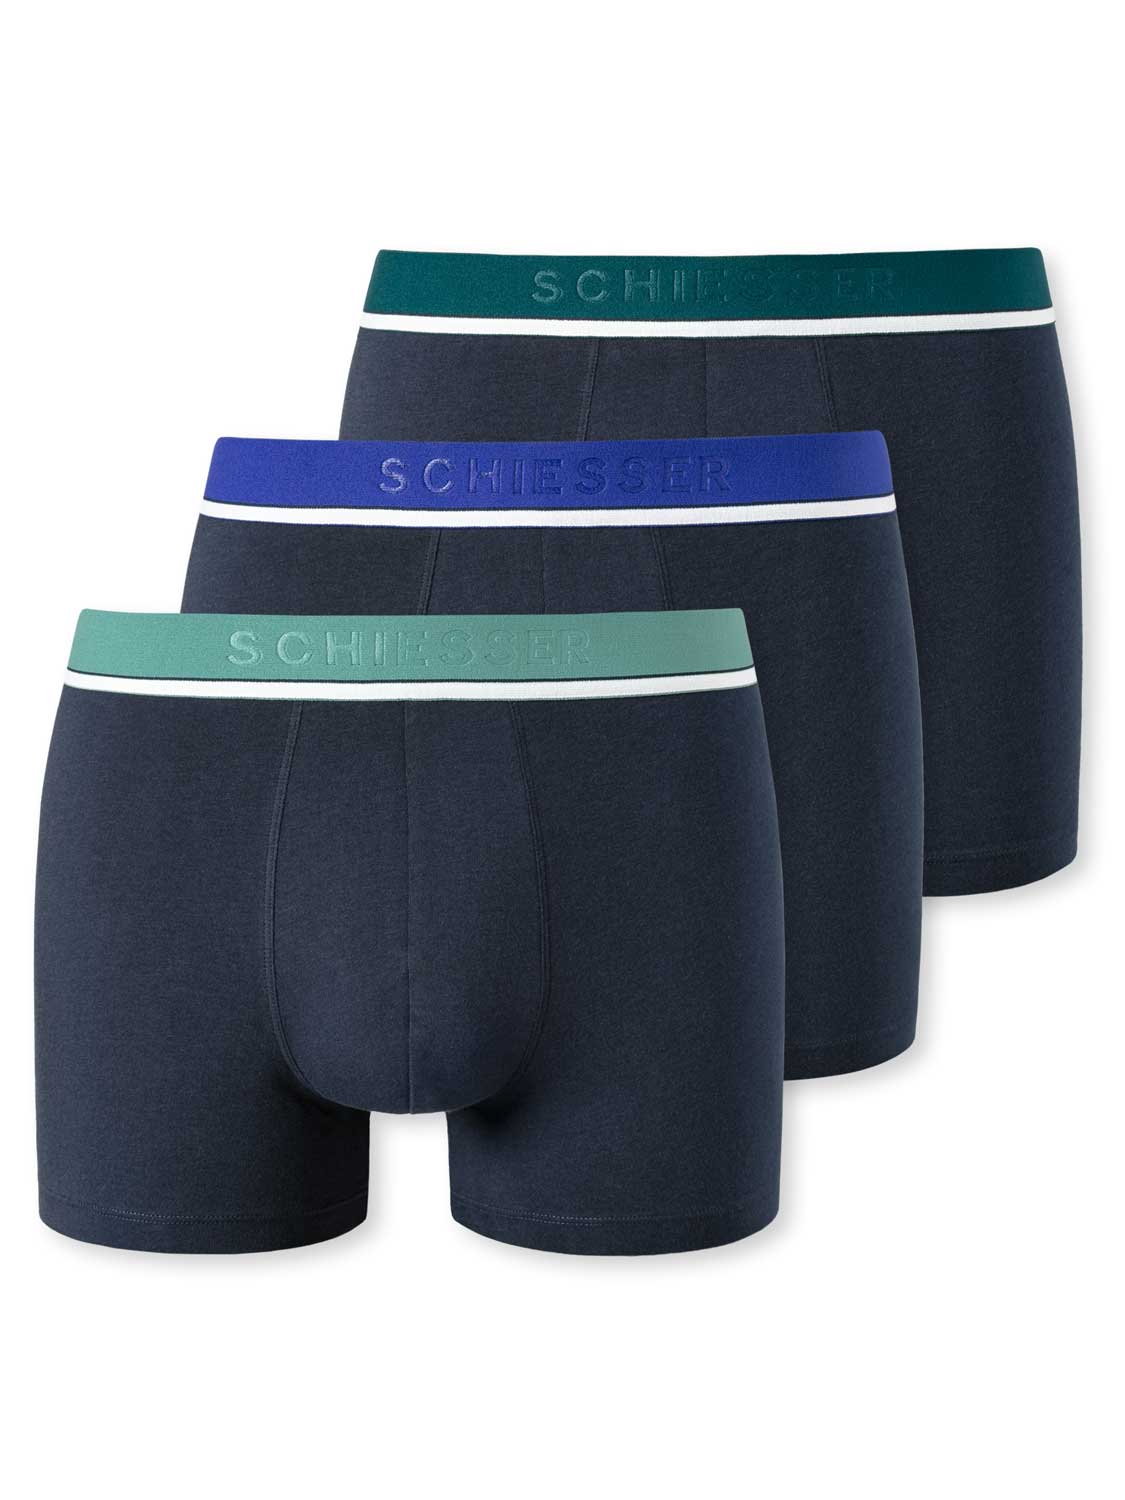 95-5 - Shorts - 3 pack